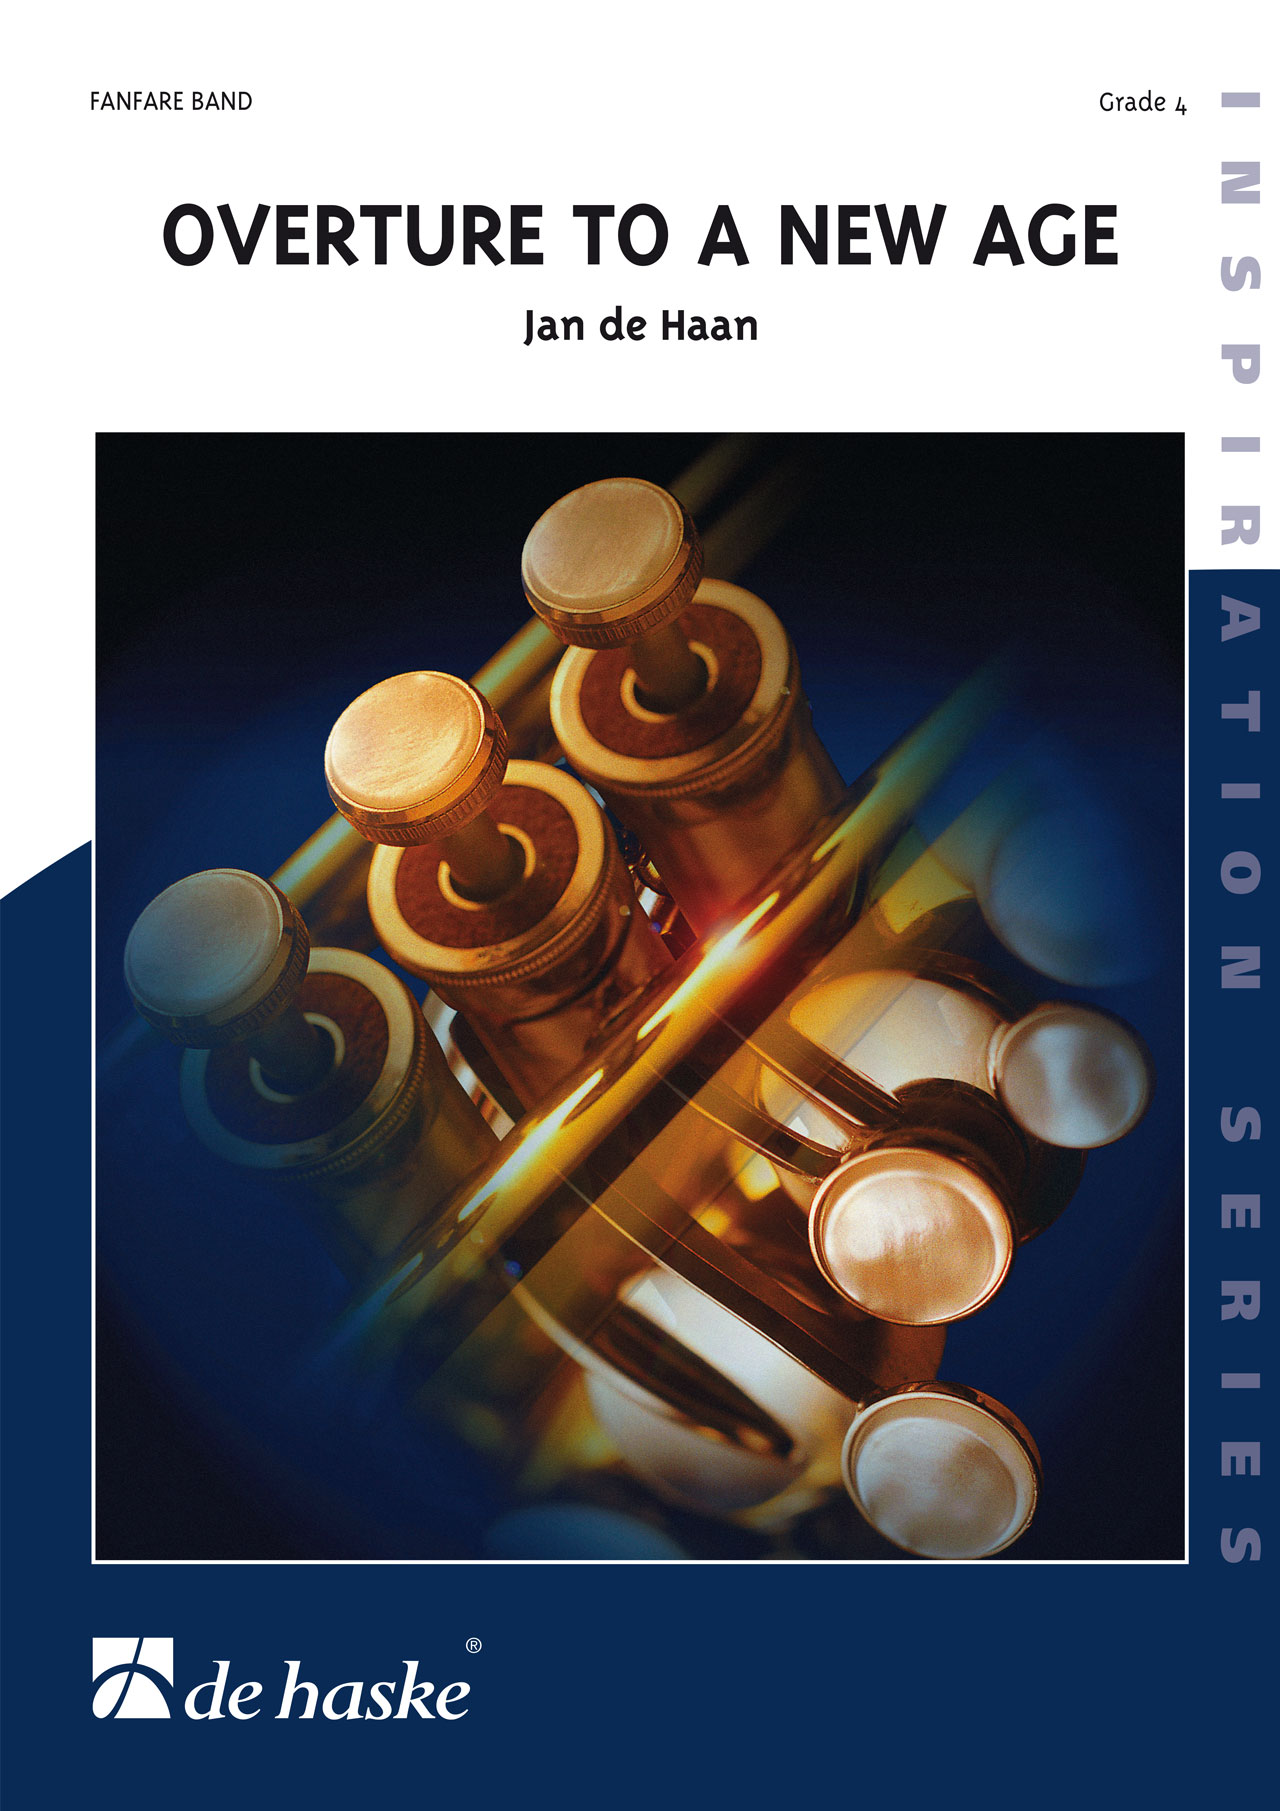 Jan de Haan: Overture to a New Age: Fanfare Band: Score